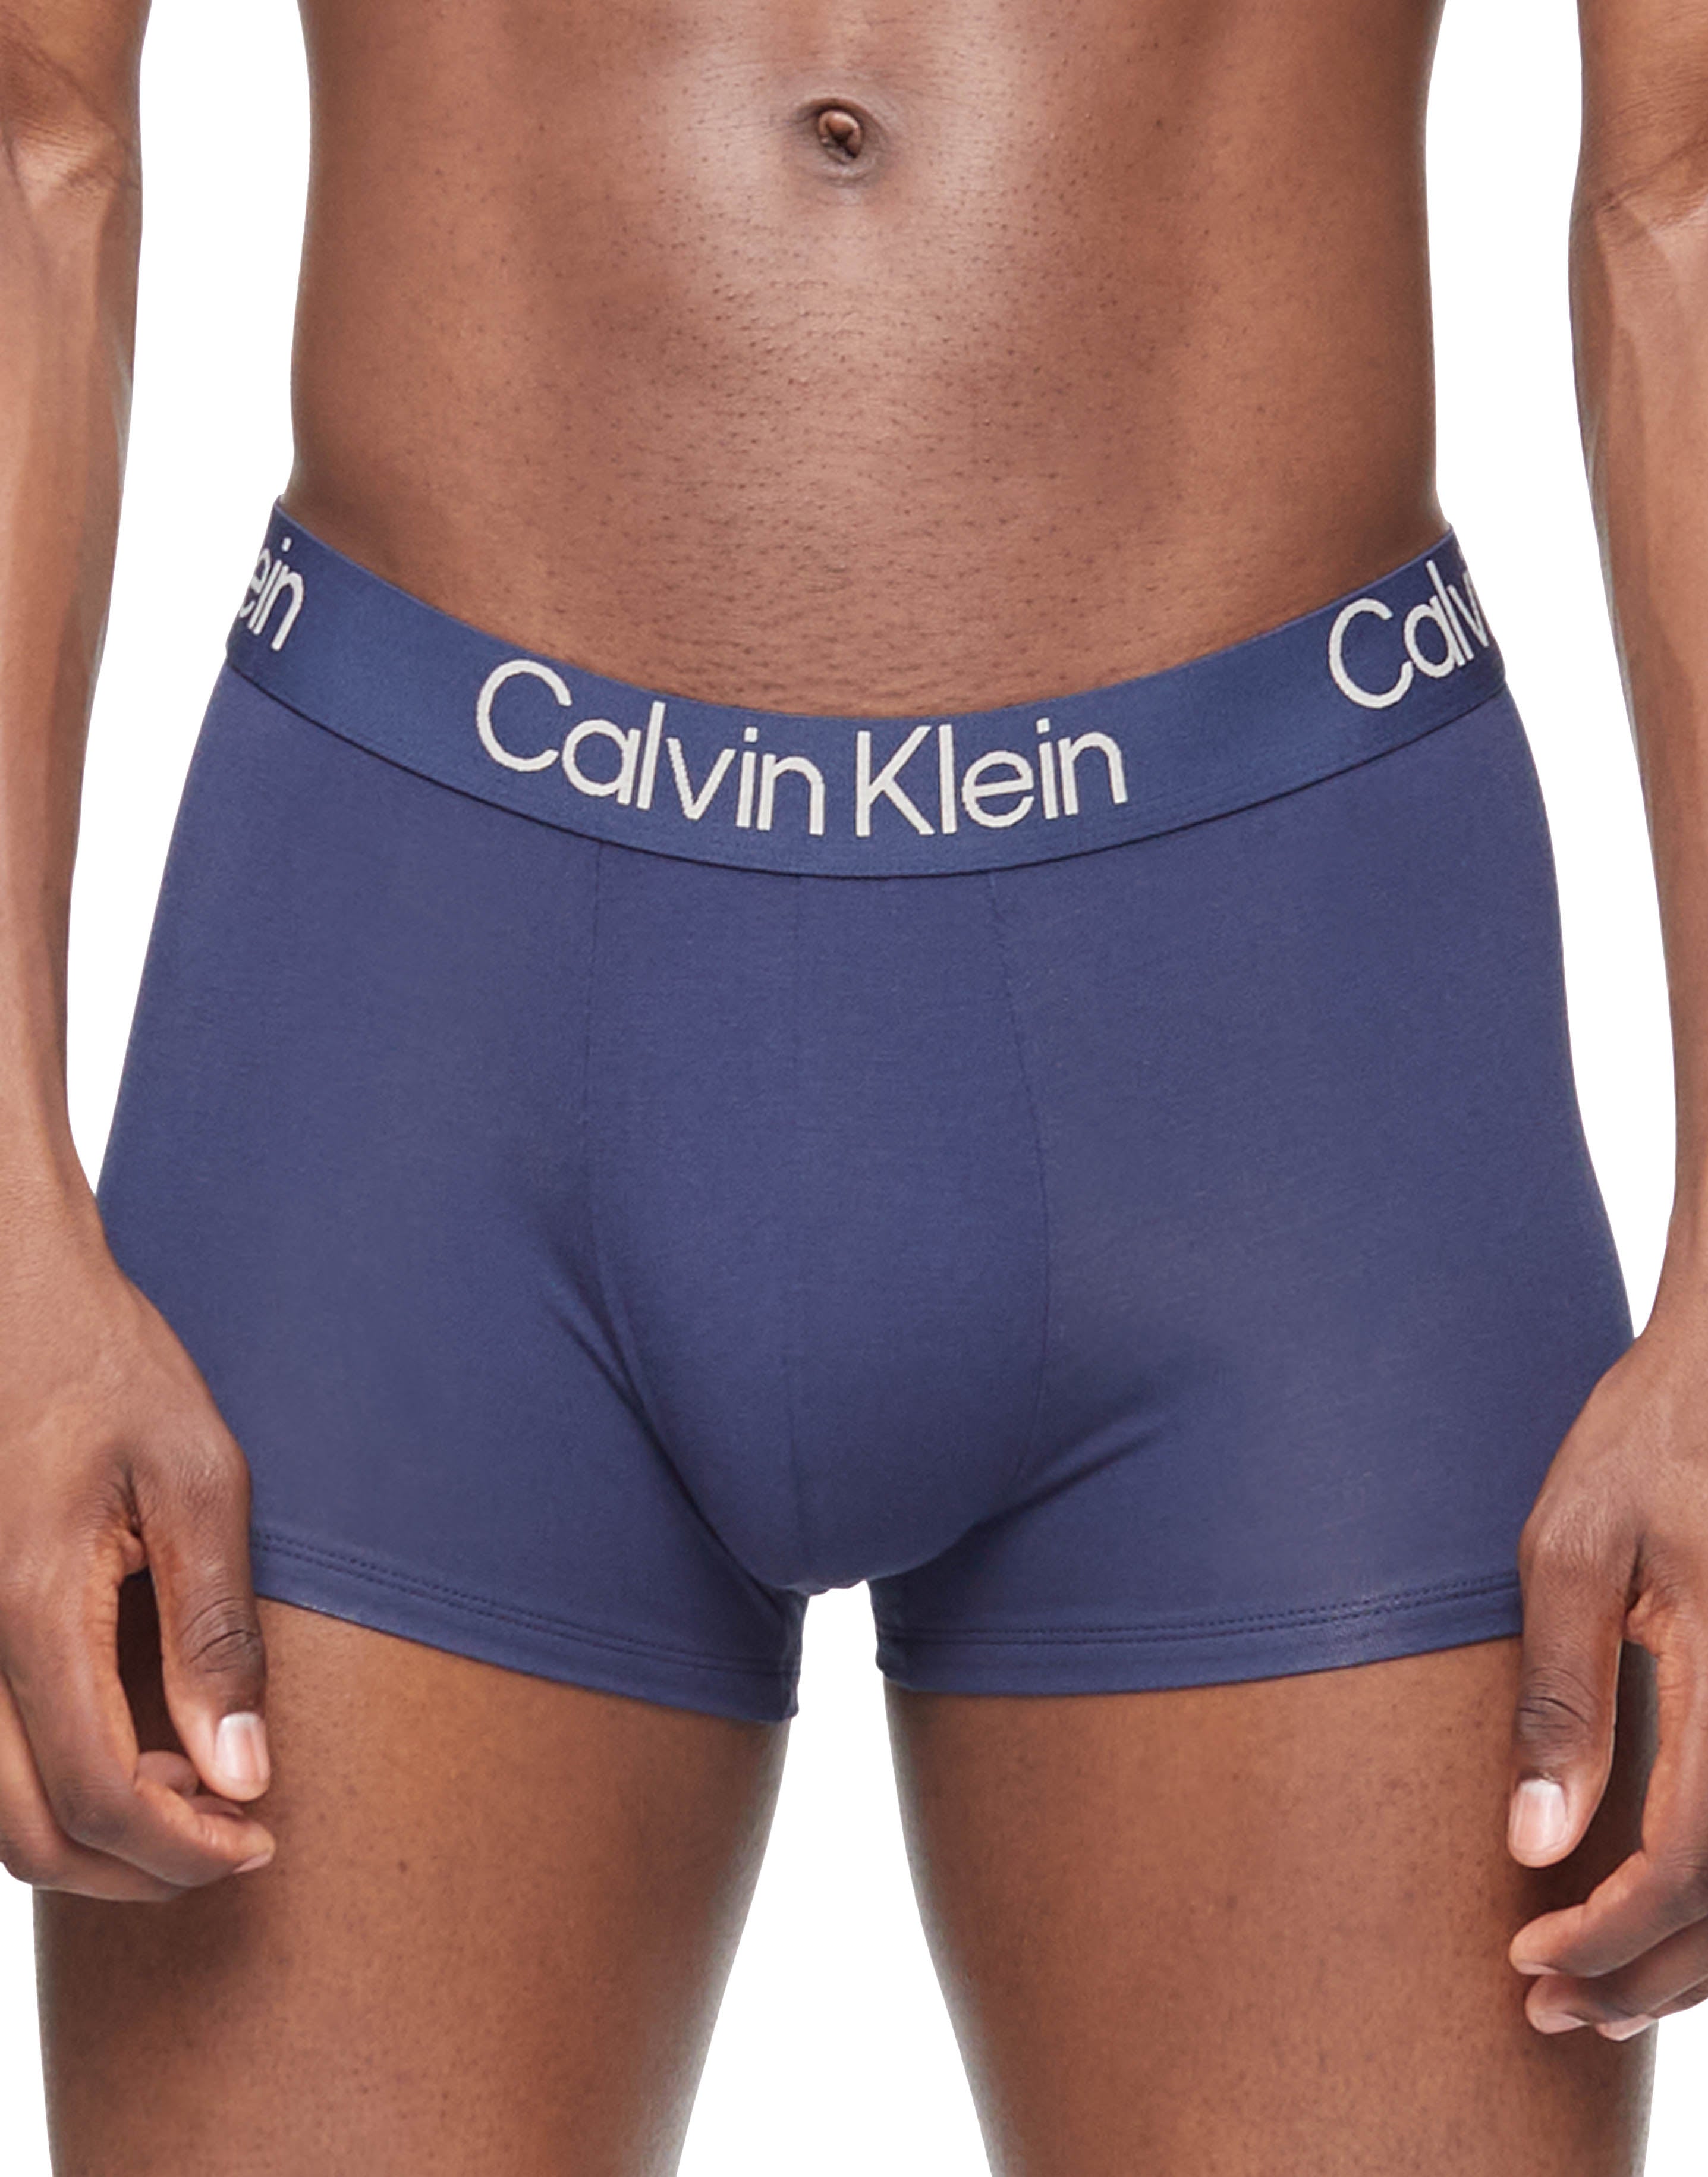  Calvin Klein Men's Active Trunk, Athletic Grey Heather